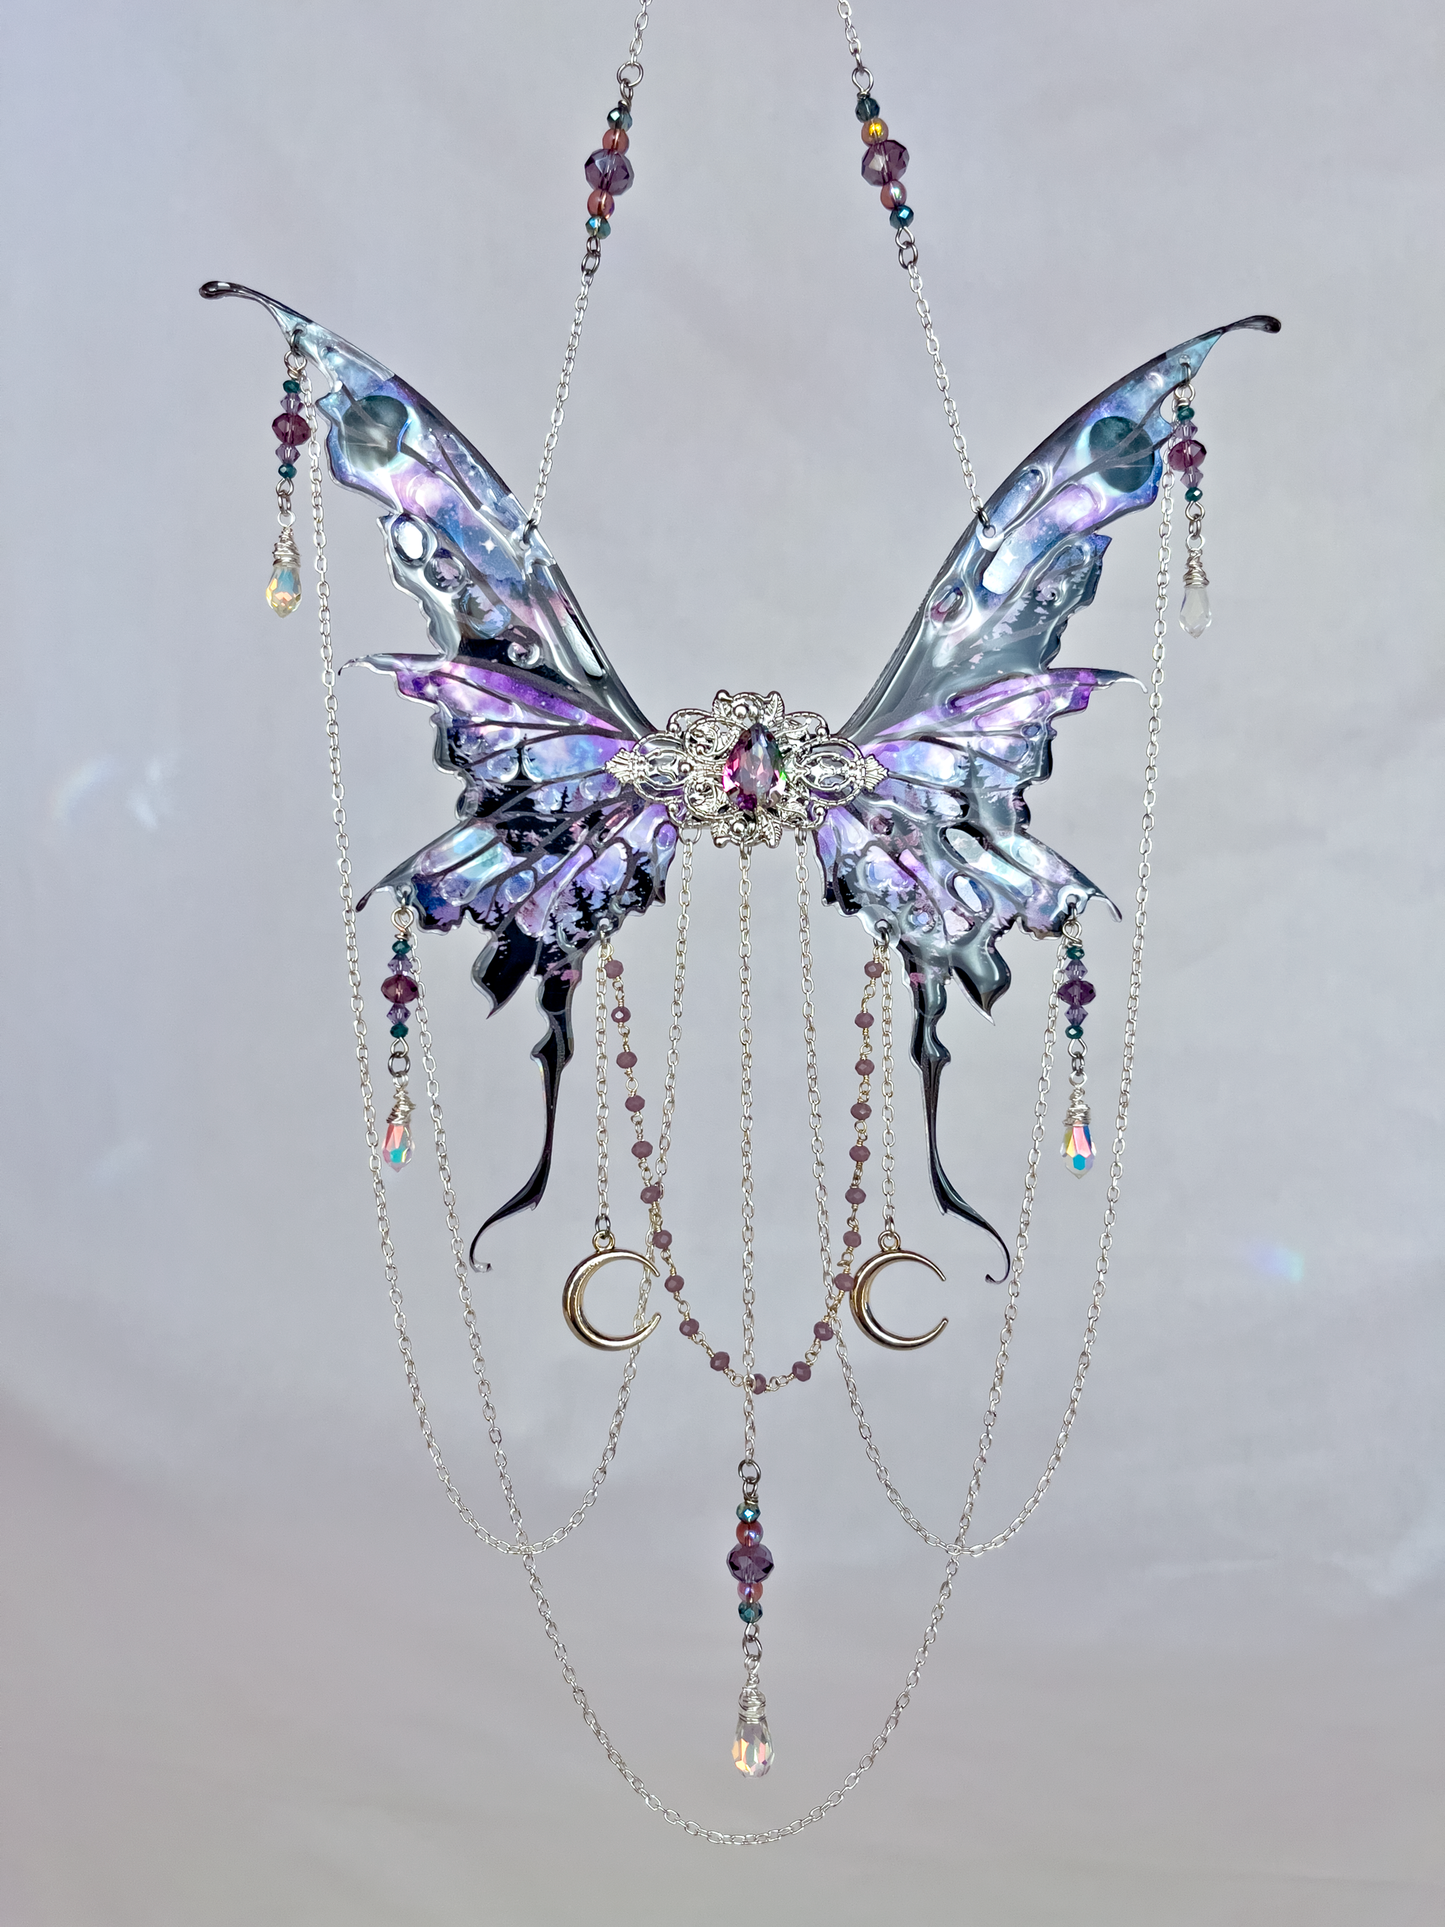 Fairy Sun Dancer in Araxia Design with Night Sky and Moon Digital Art